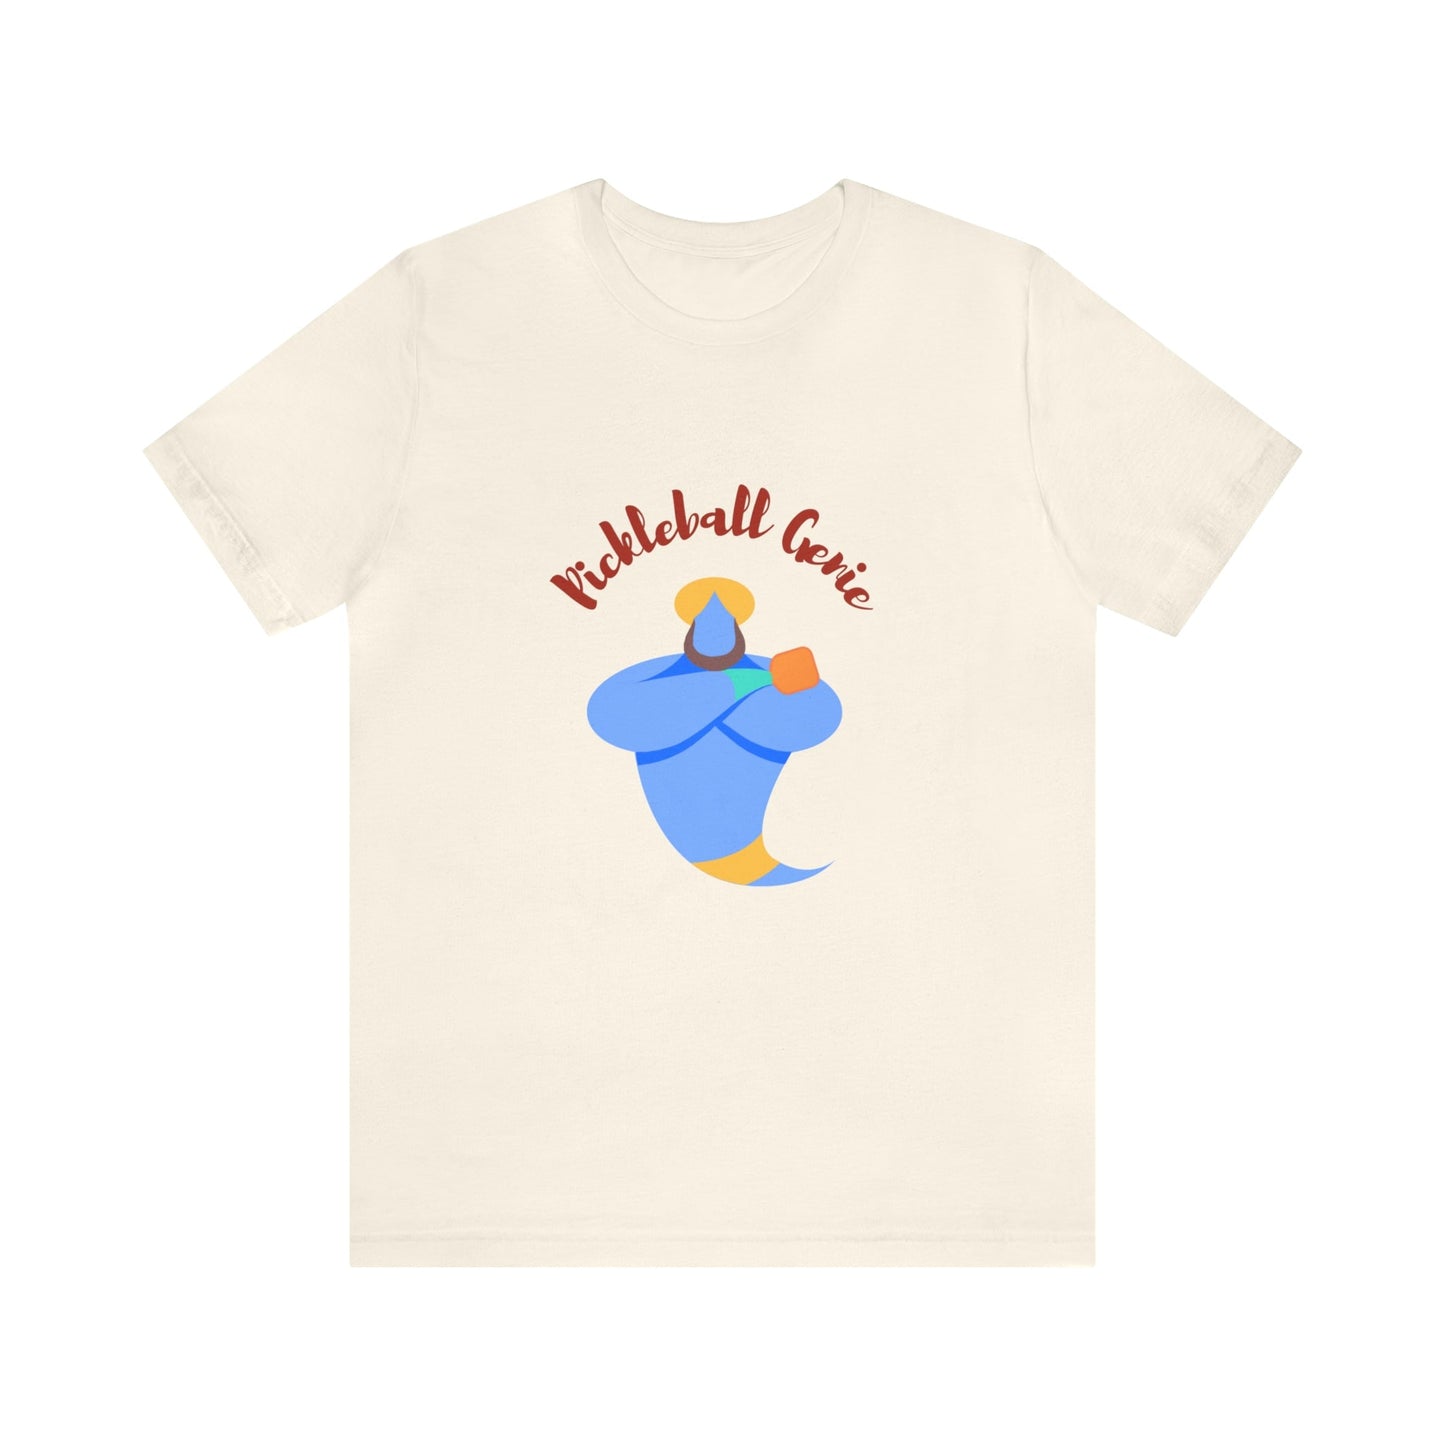 'Pickleball Genie' T-Shirt